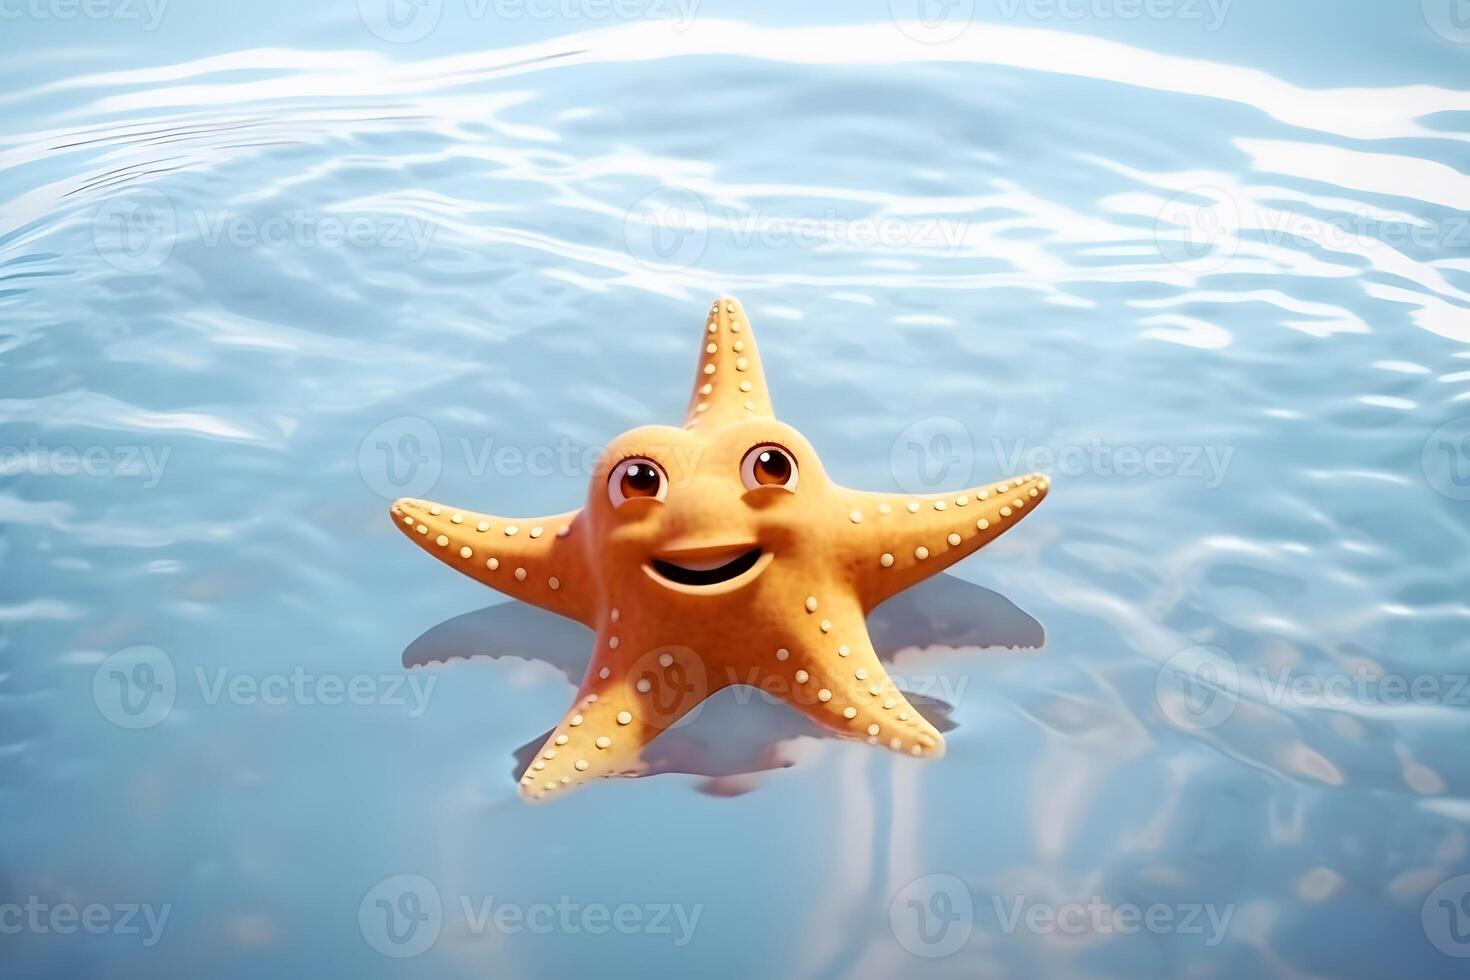 Cute kids underwater character in cartoon style. Neural network photo